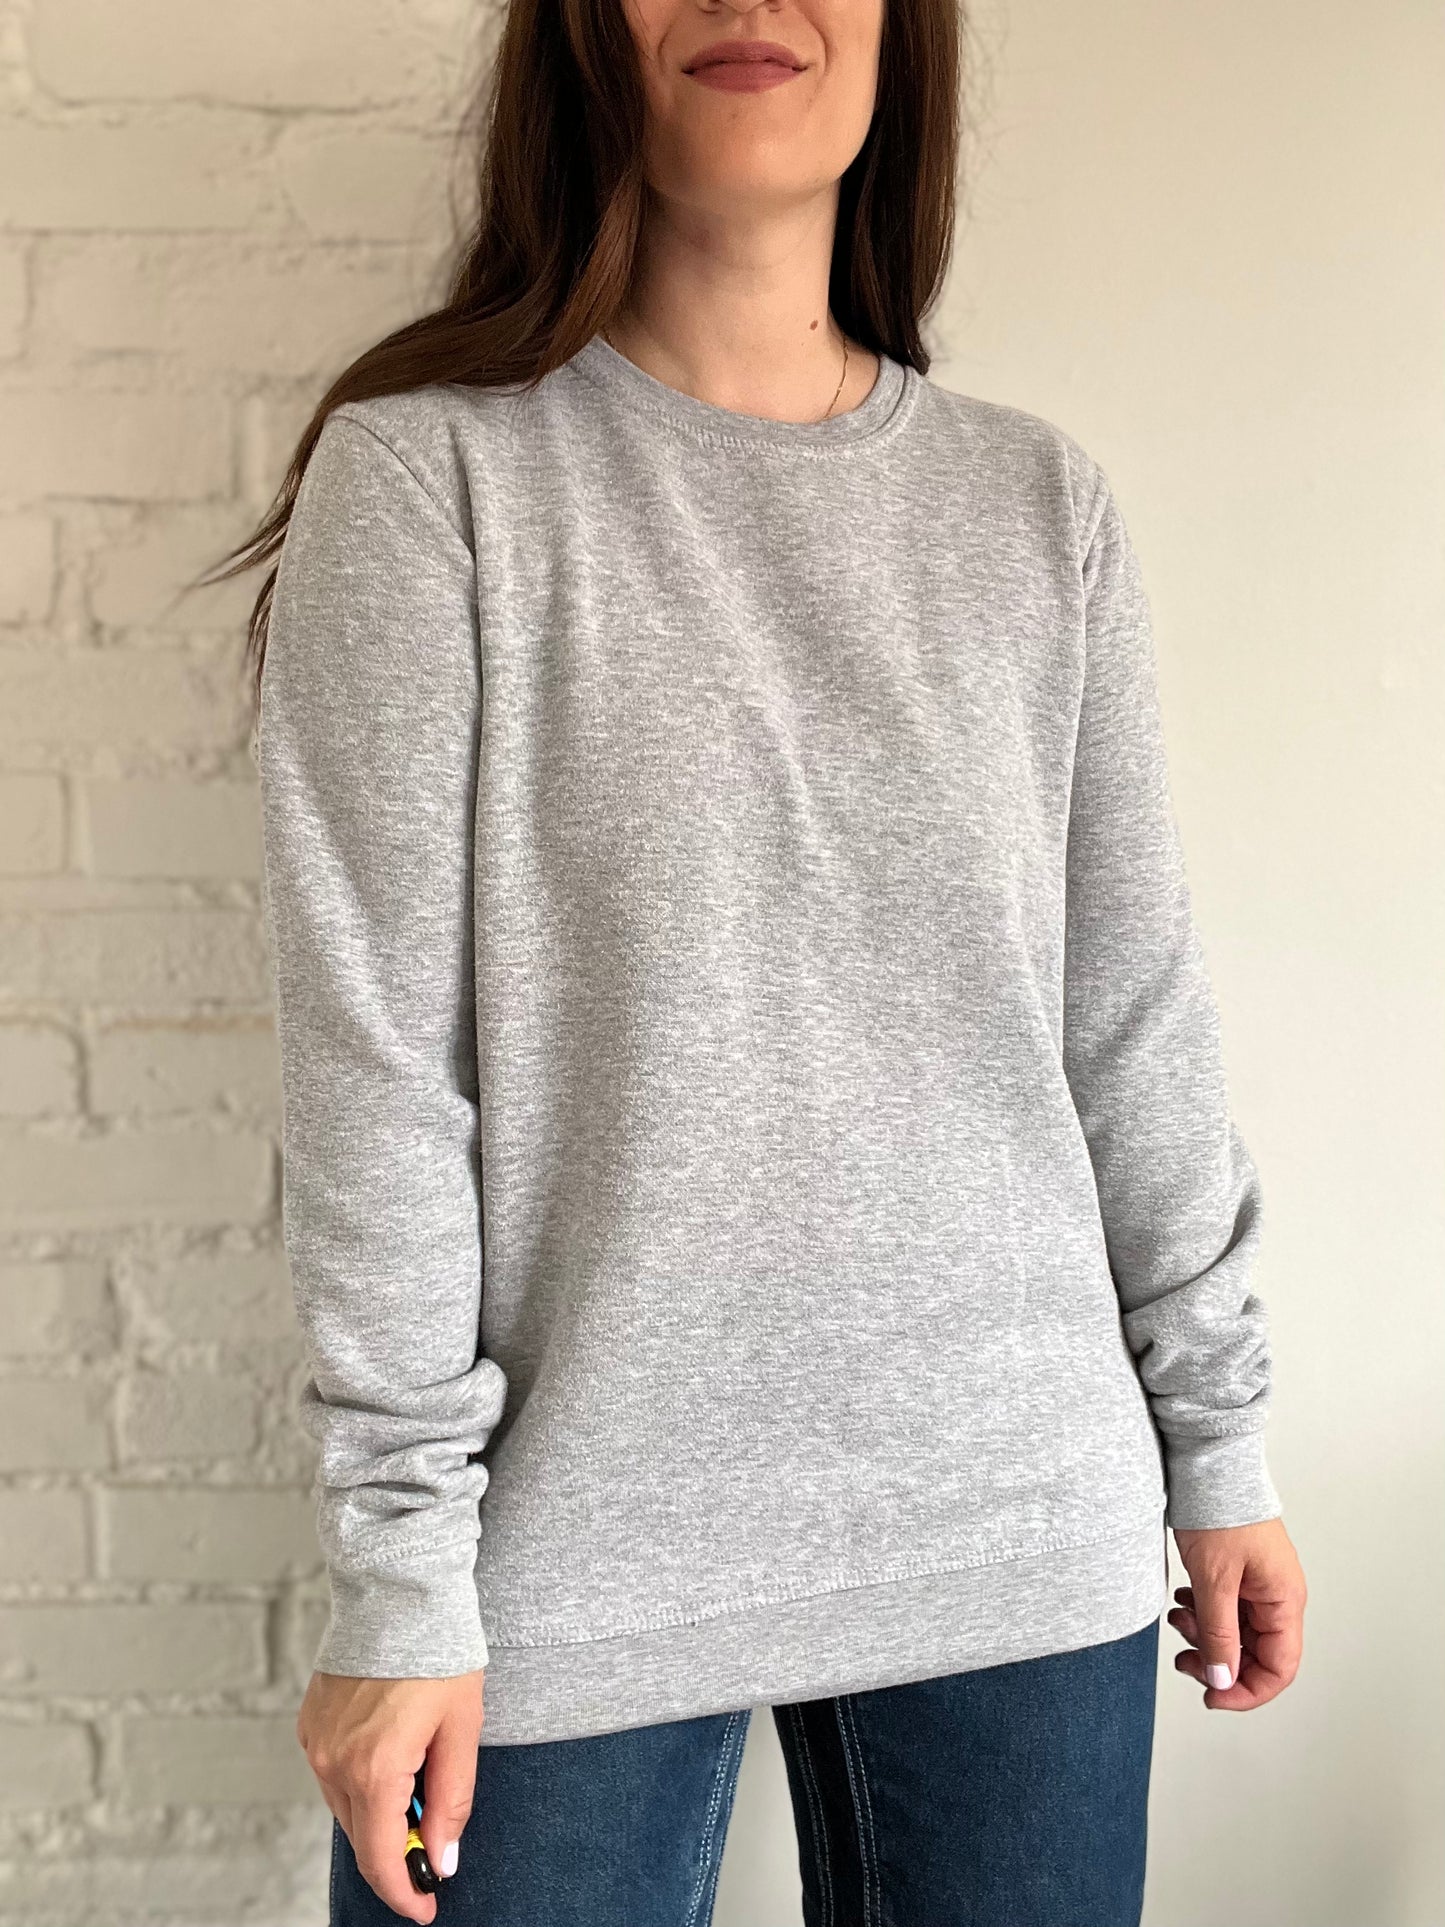 Minimalist Heather Grey Sweater - M